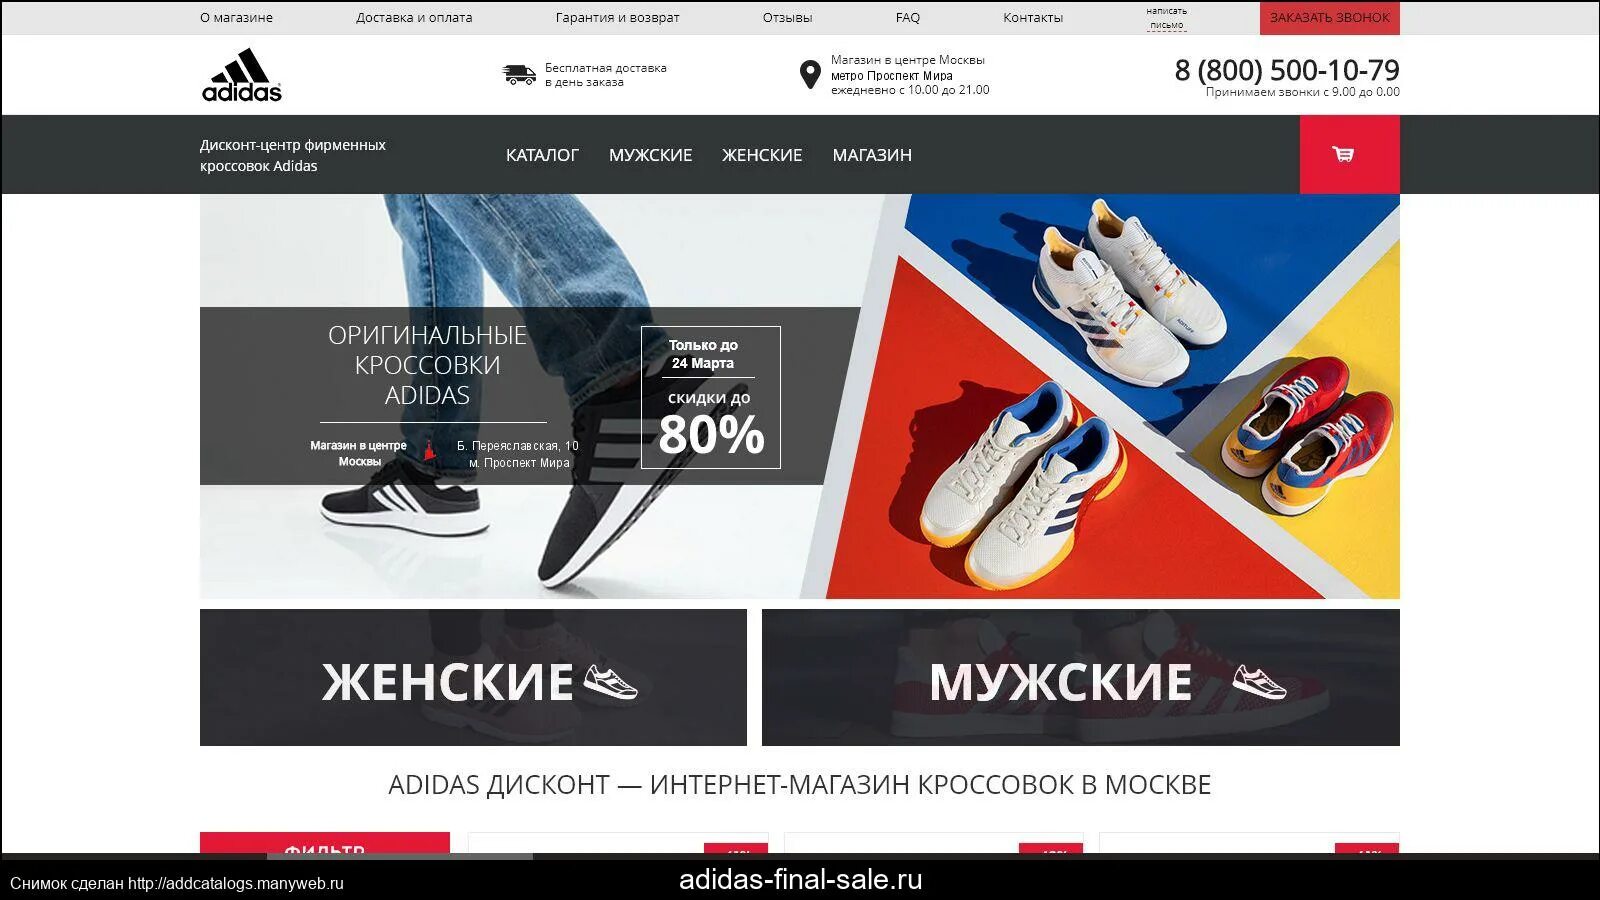 Адидас сайт казахстан. Скриншот сайта адидас.